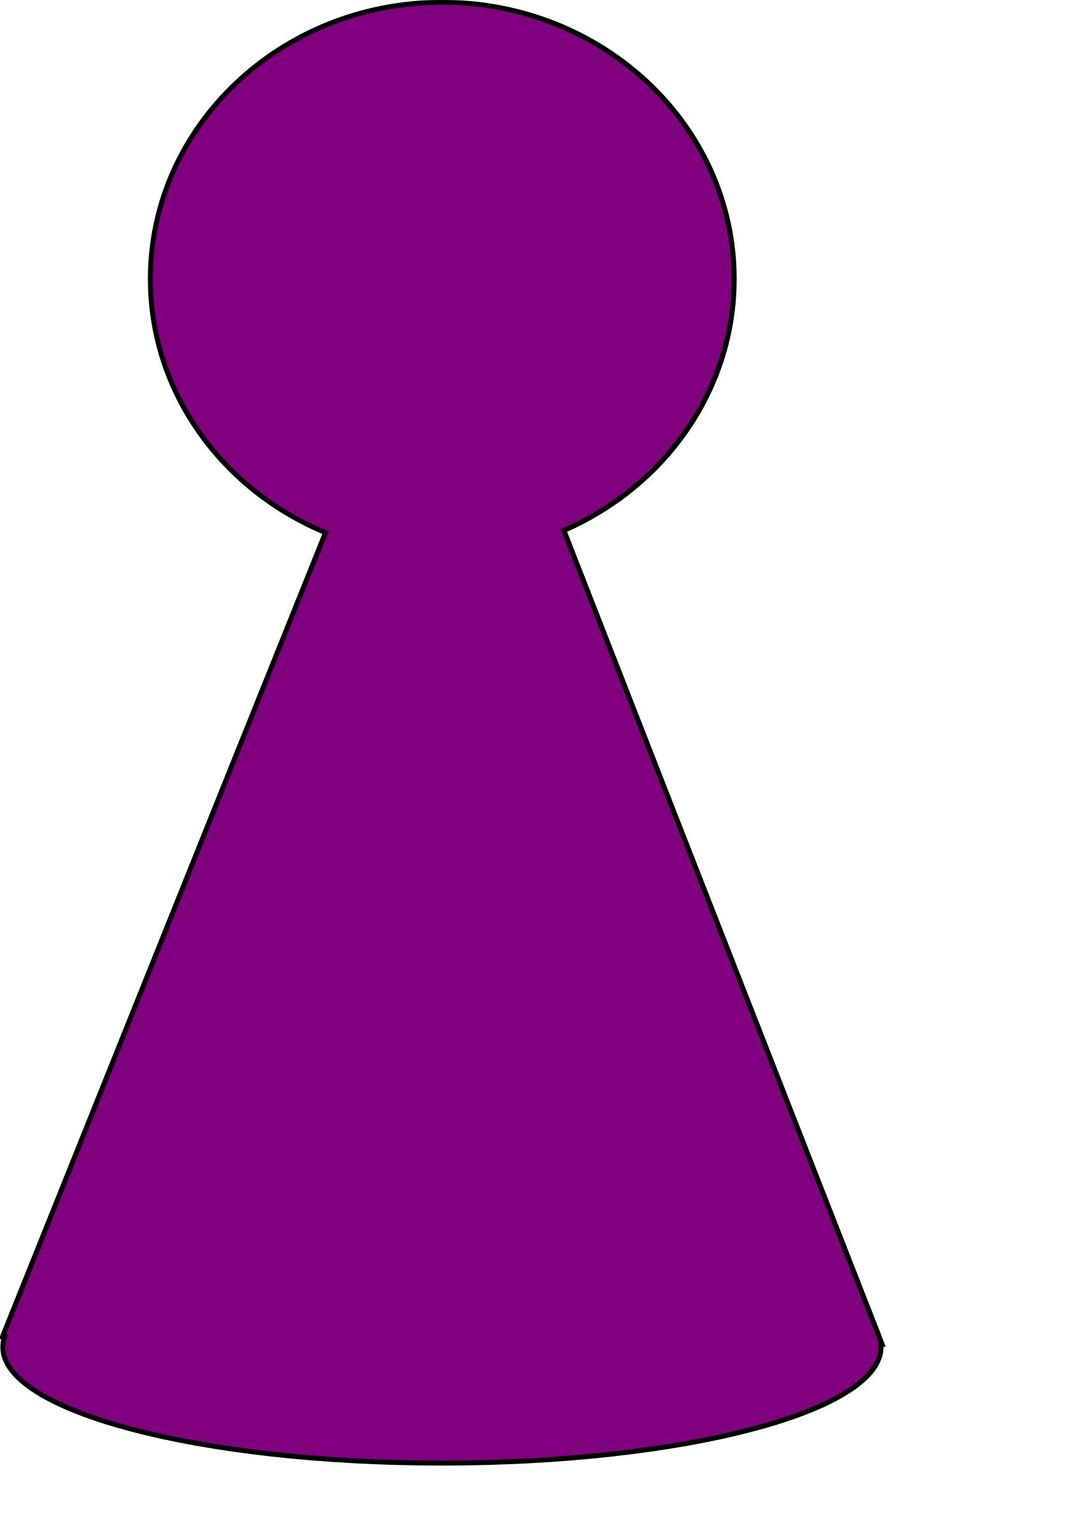 Ludo Piece - Plum Purple png transparent